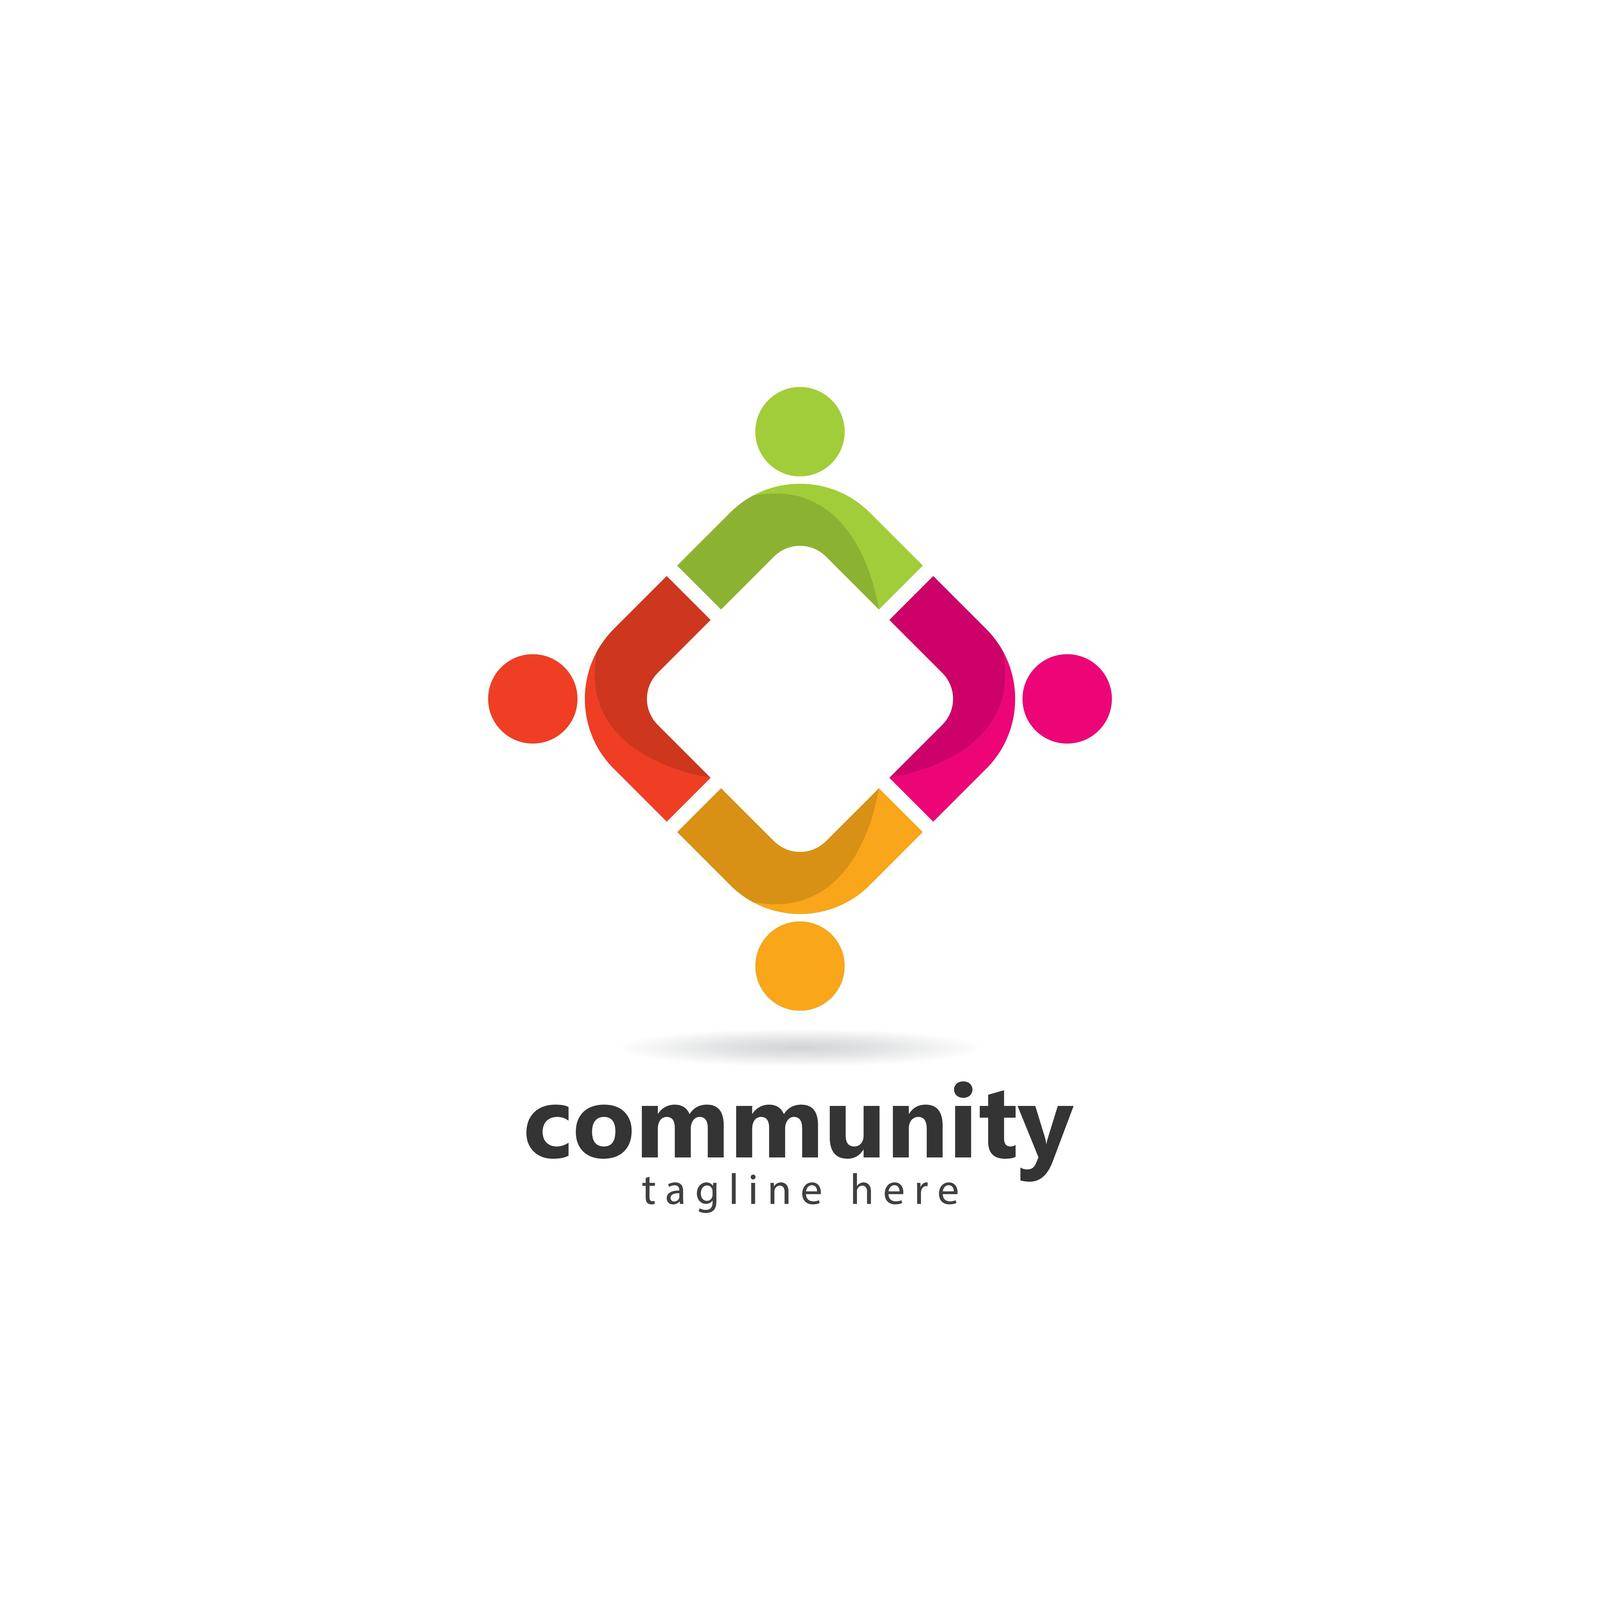 Adoption and community care Logo template vector by kosasihindra55